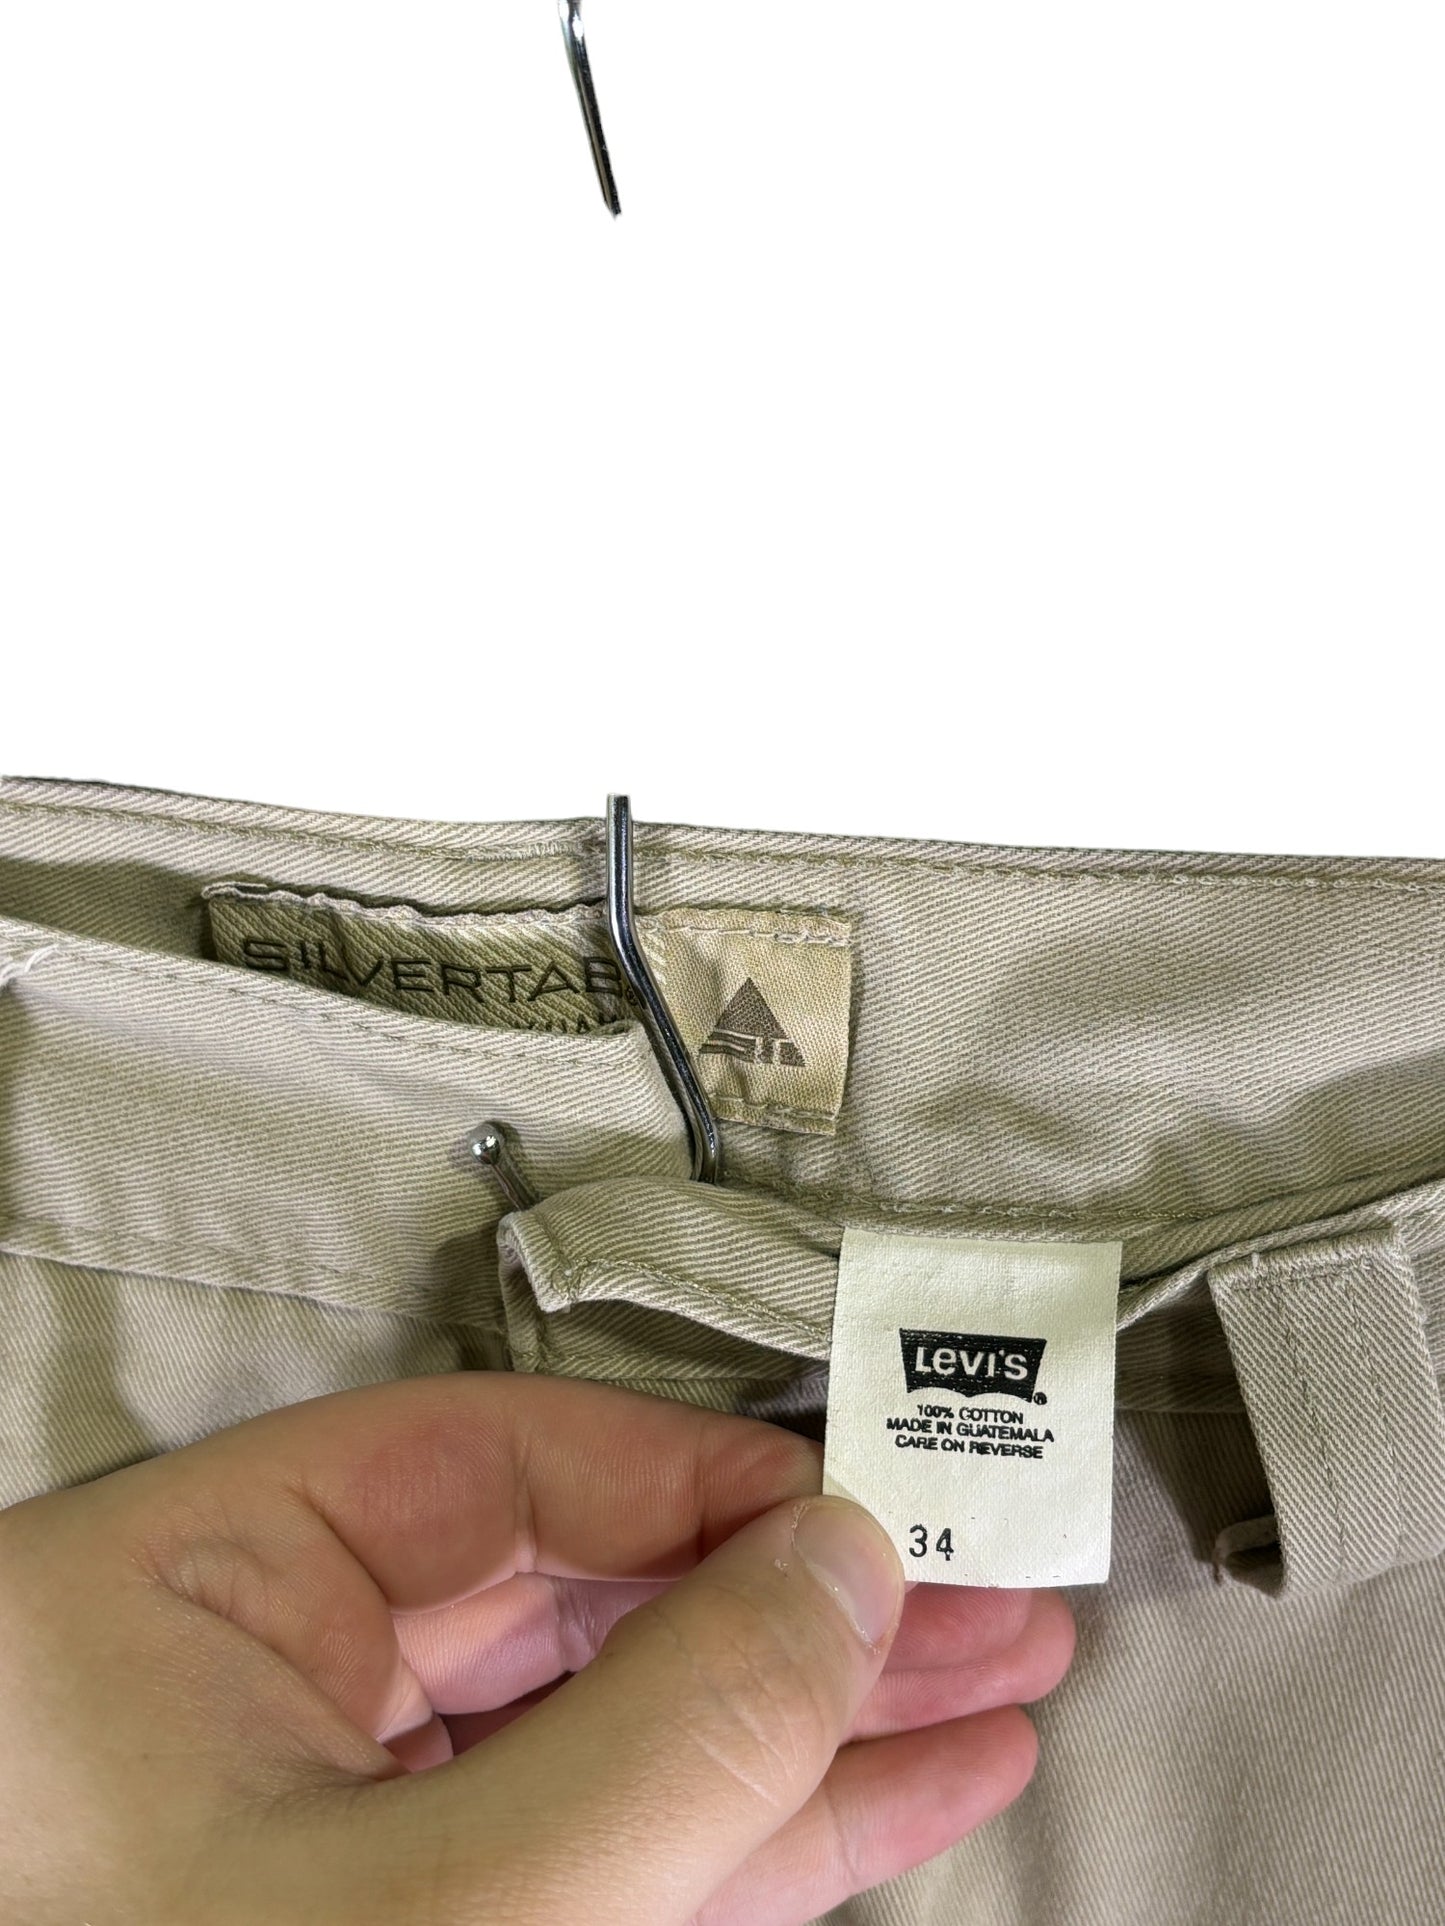 Vintage Levi's Silver Tab Khaki Cargo Shorts Size 34